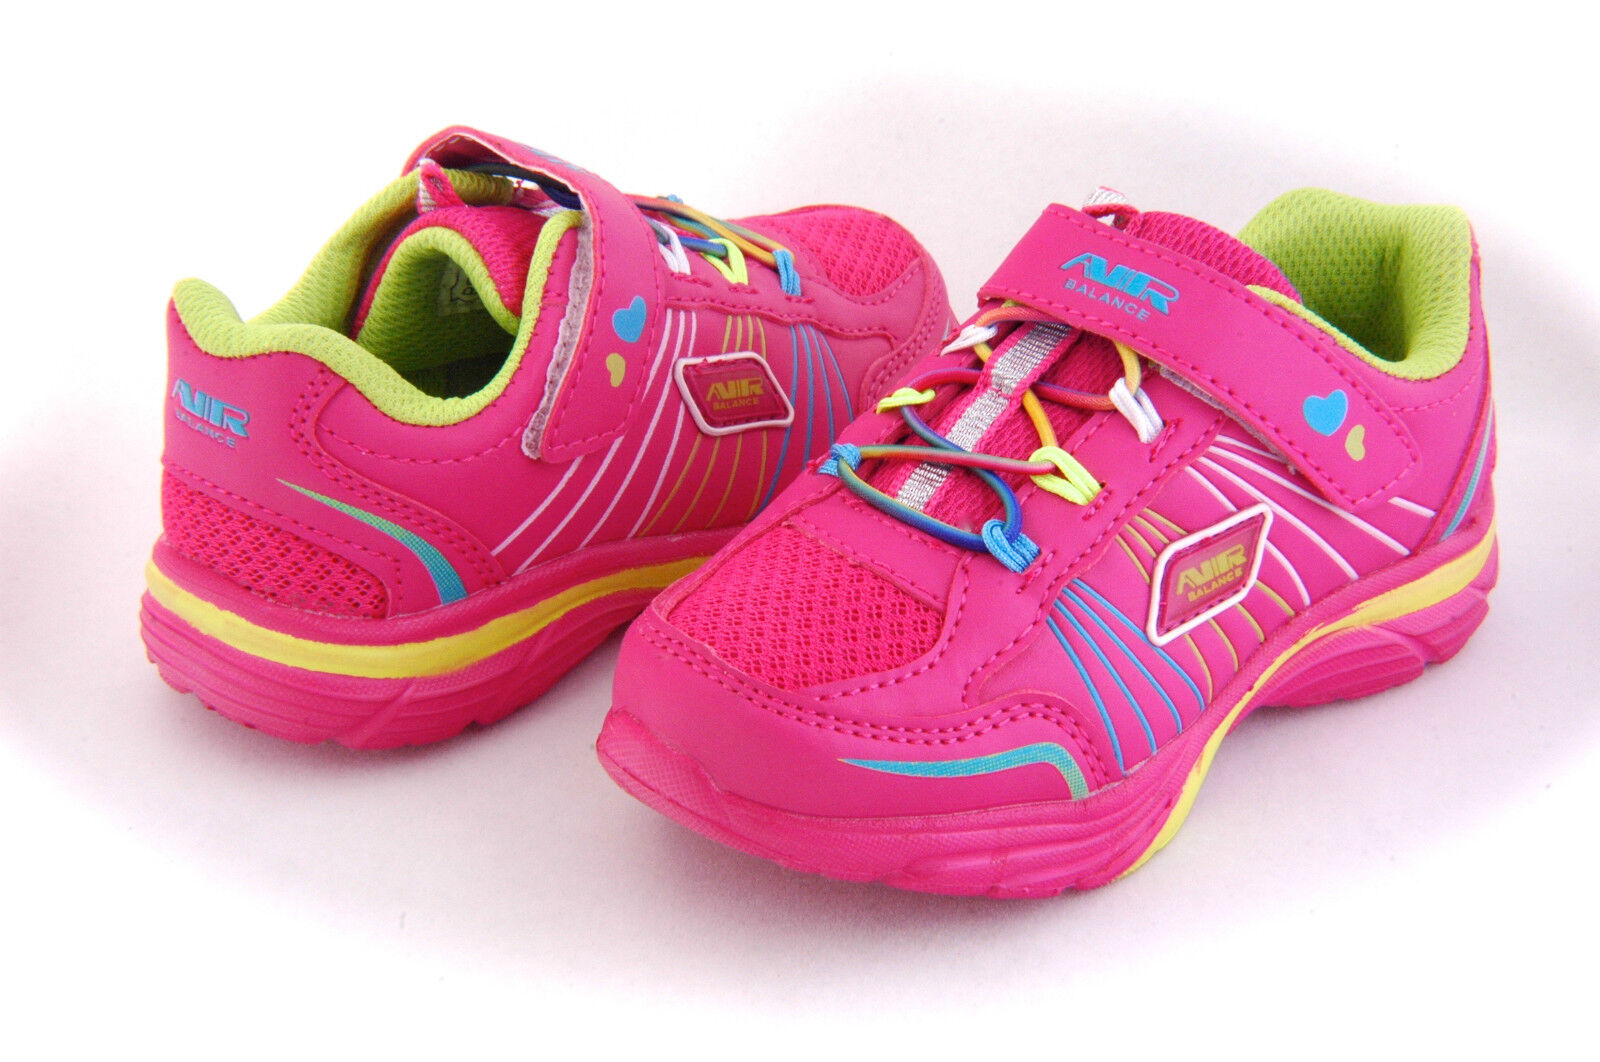 Voorbijgaand kam sla Girls Toddler Running tennis shoes fuchsia & Green Light Weigh | eBay